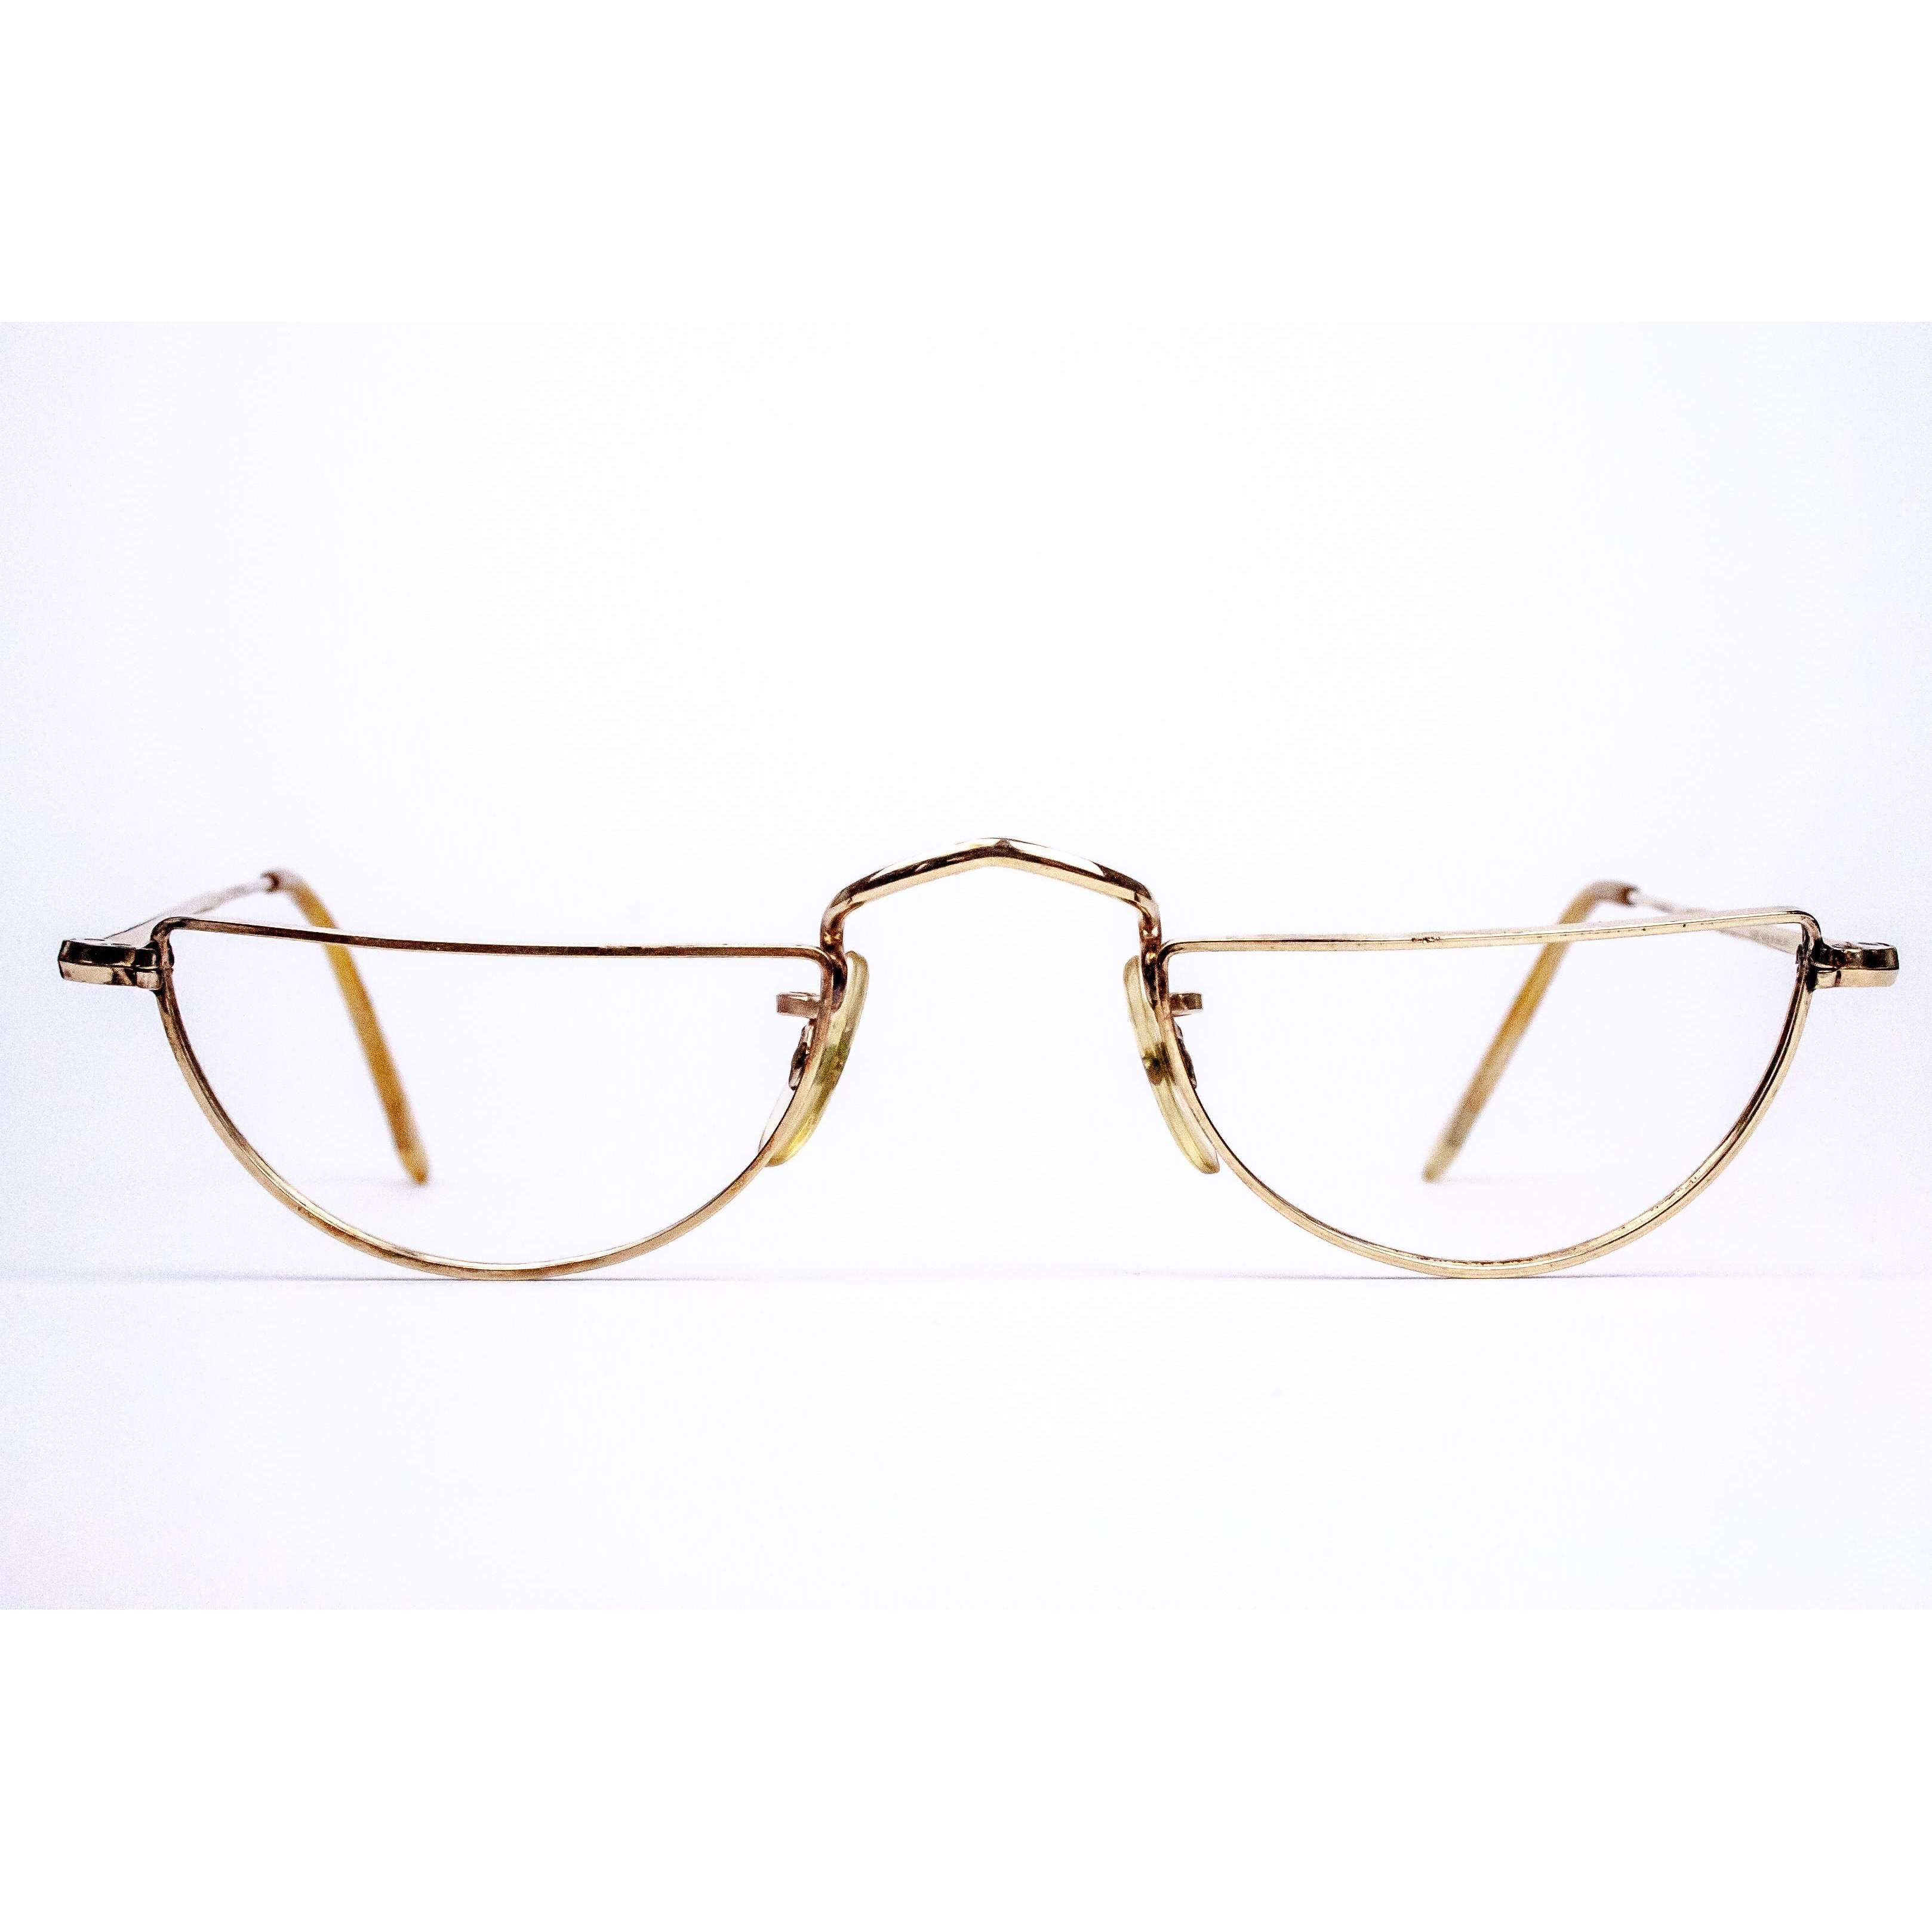 NHS Model 722 1/2 Eye Gold Glasses